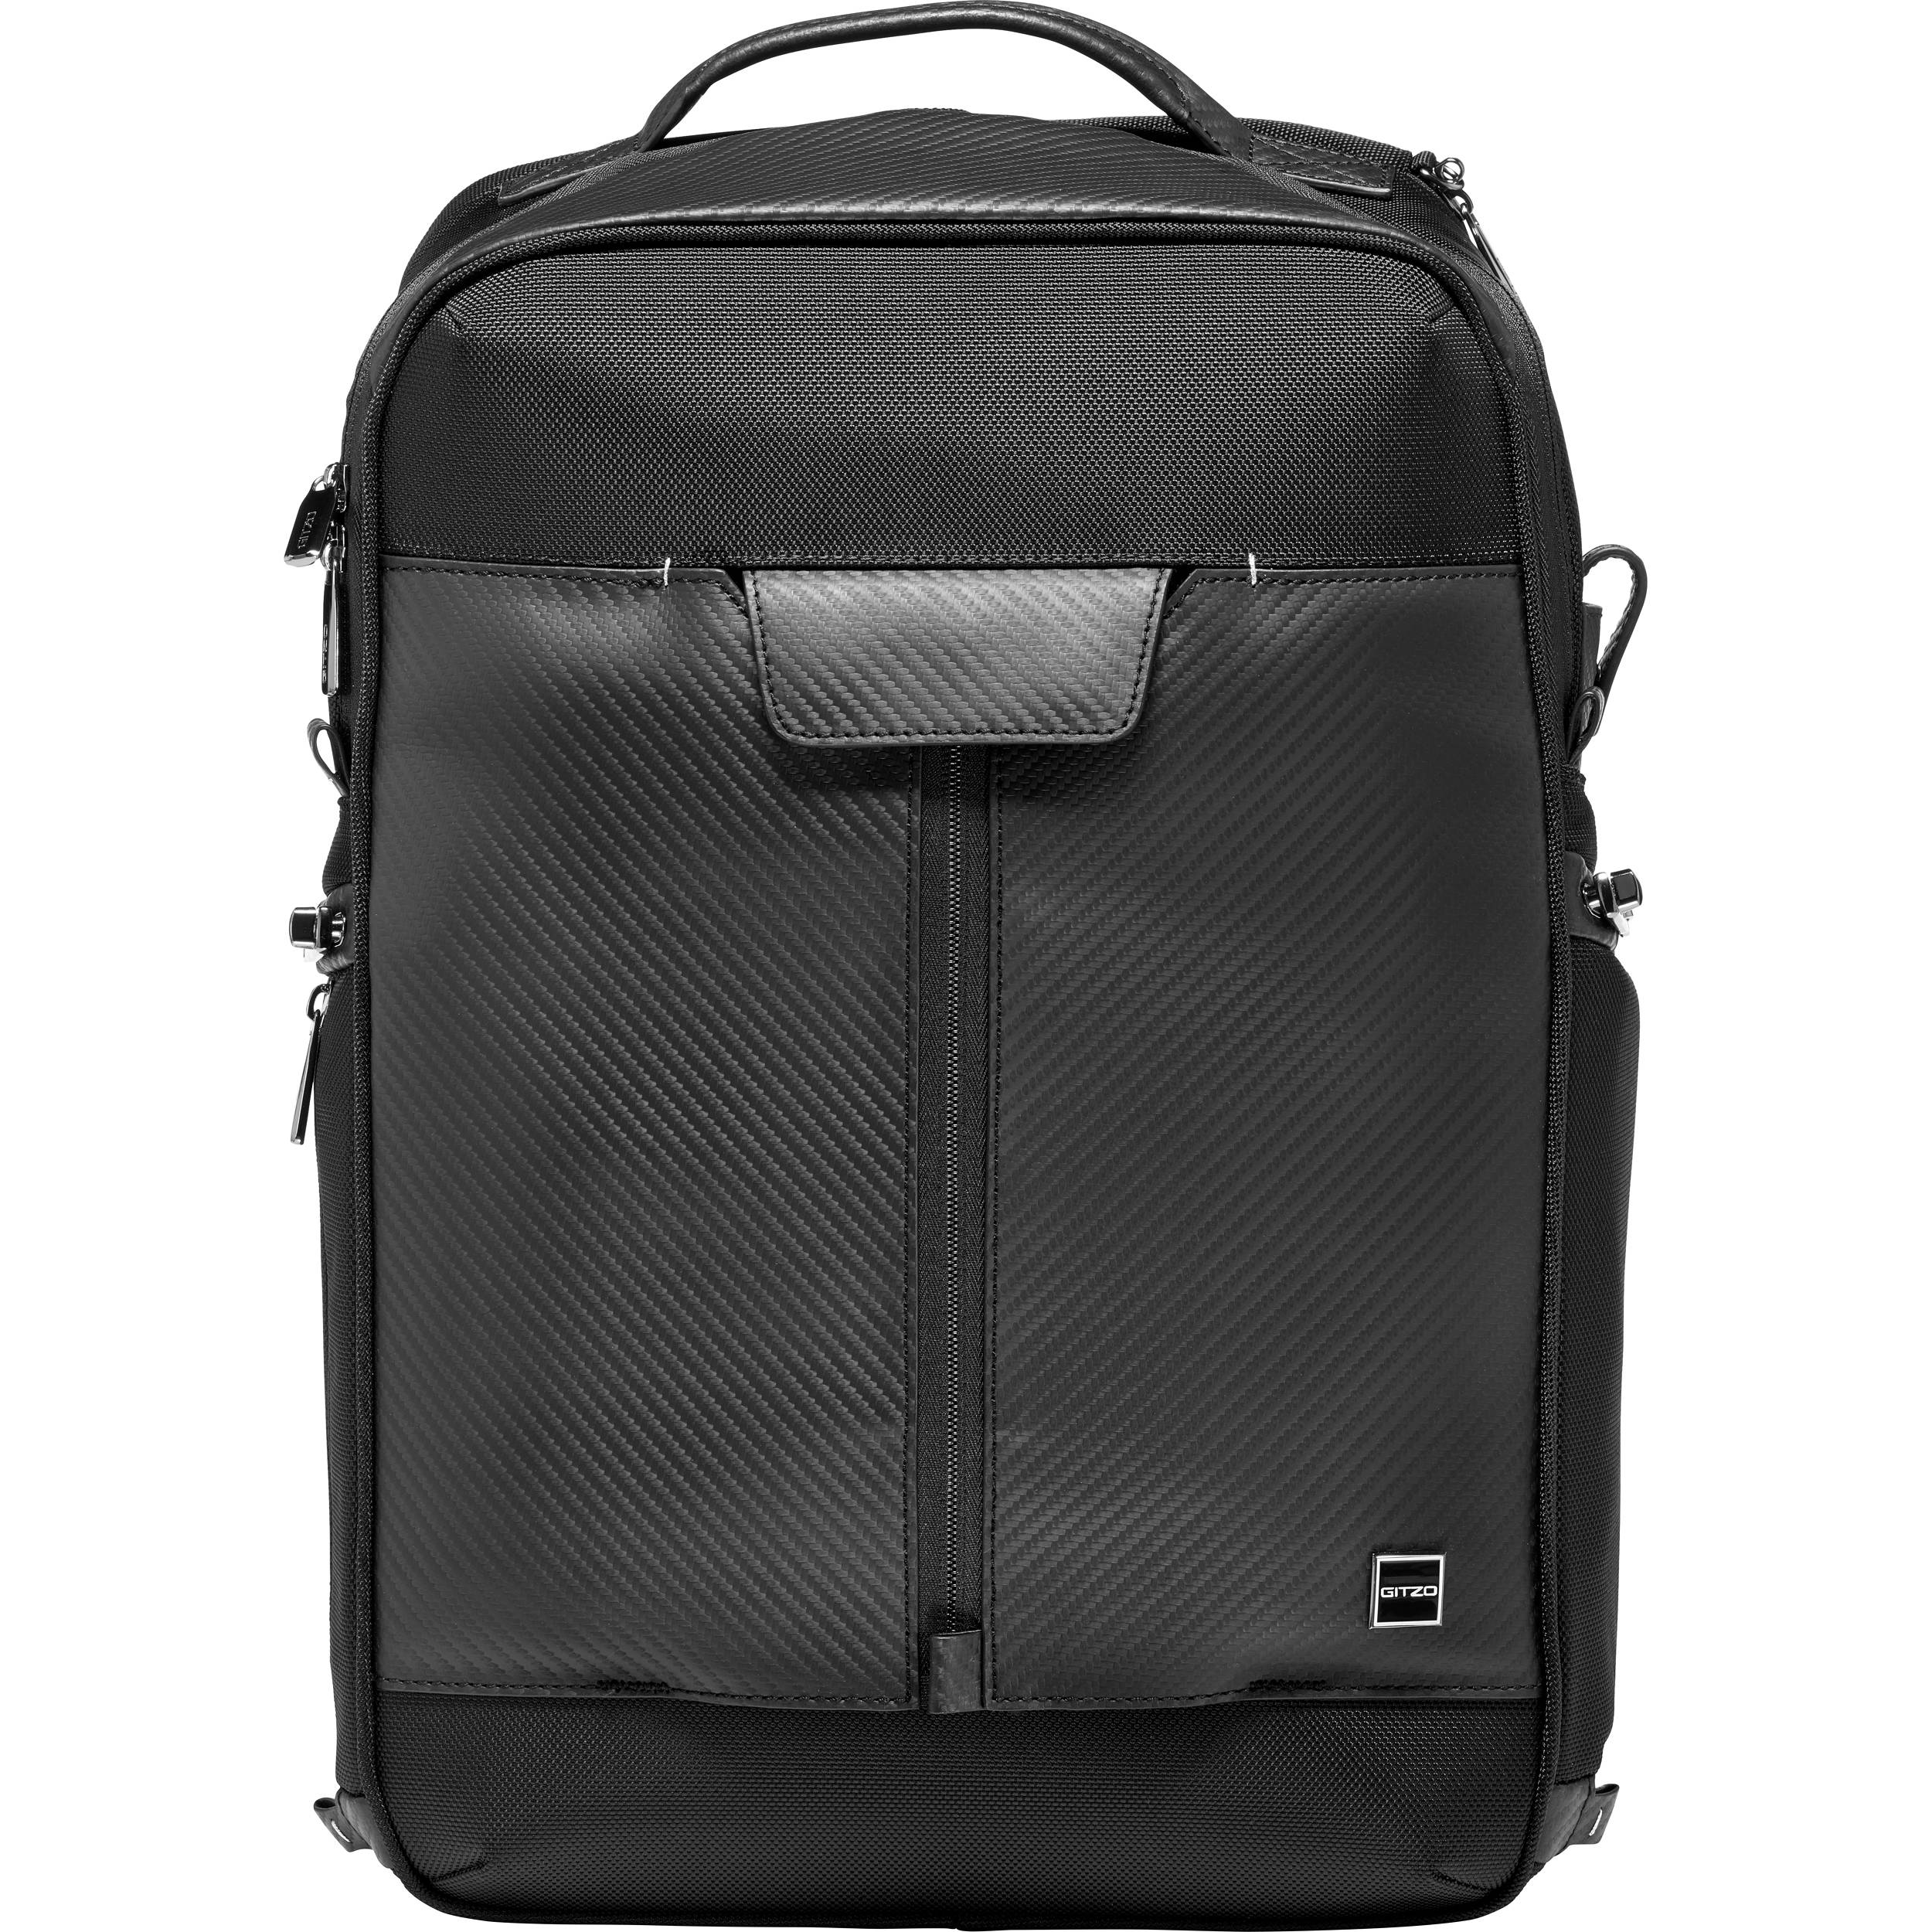 black lebron backpack